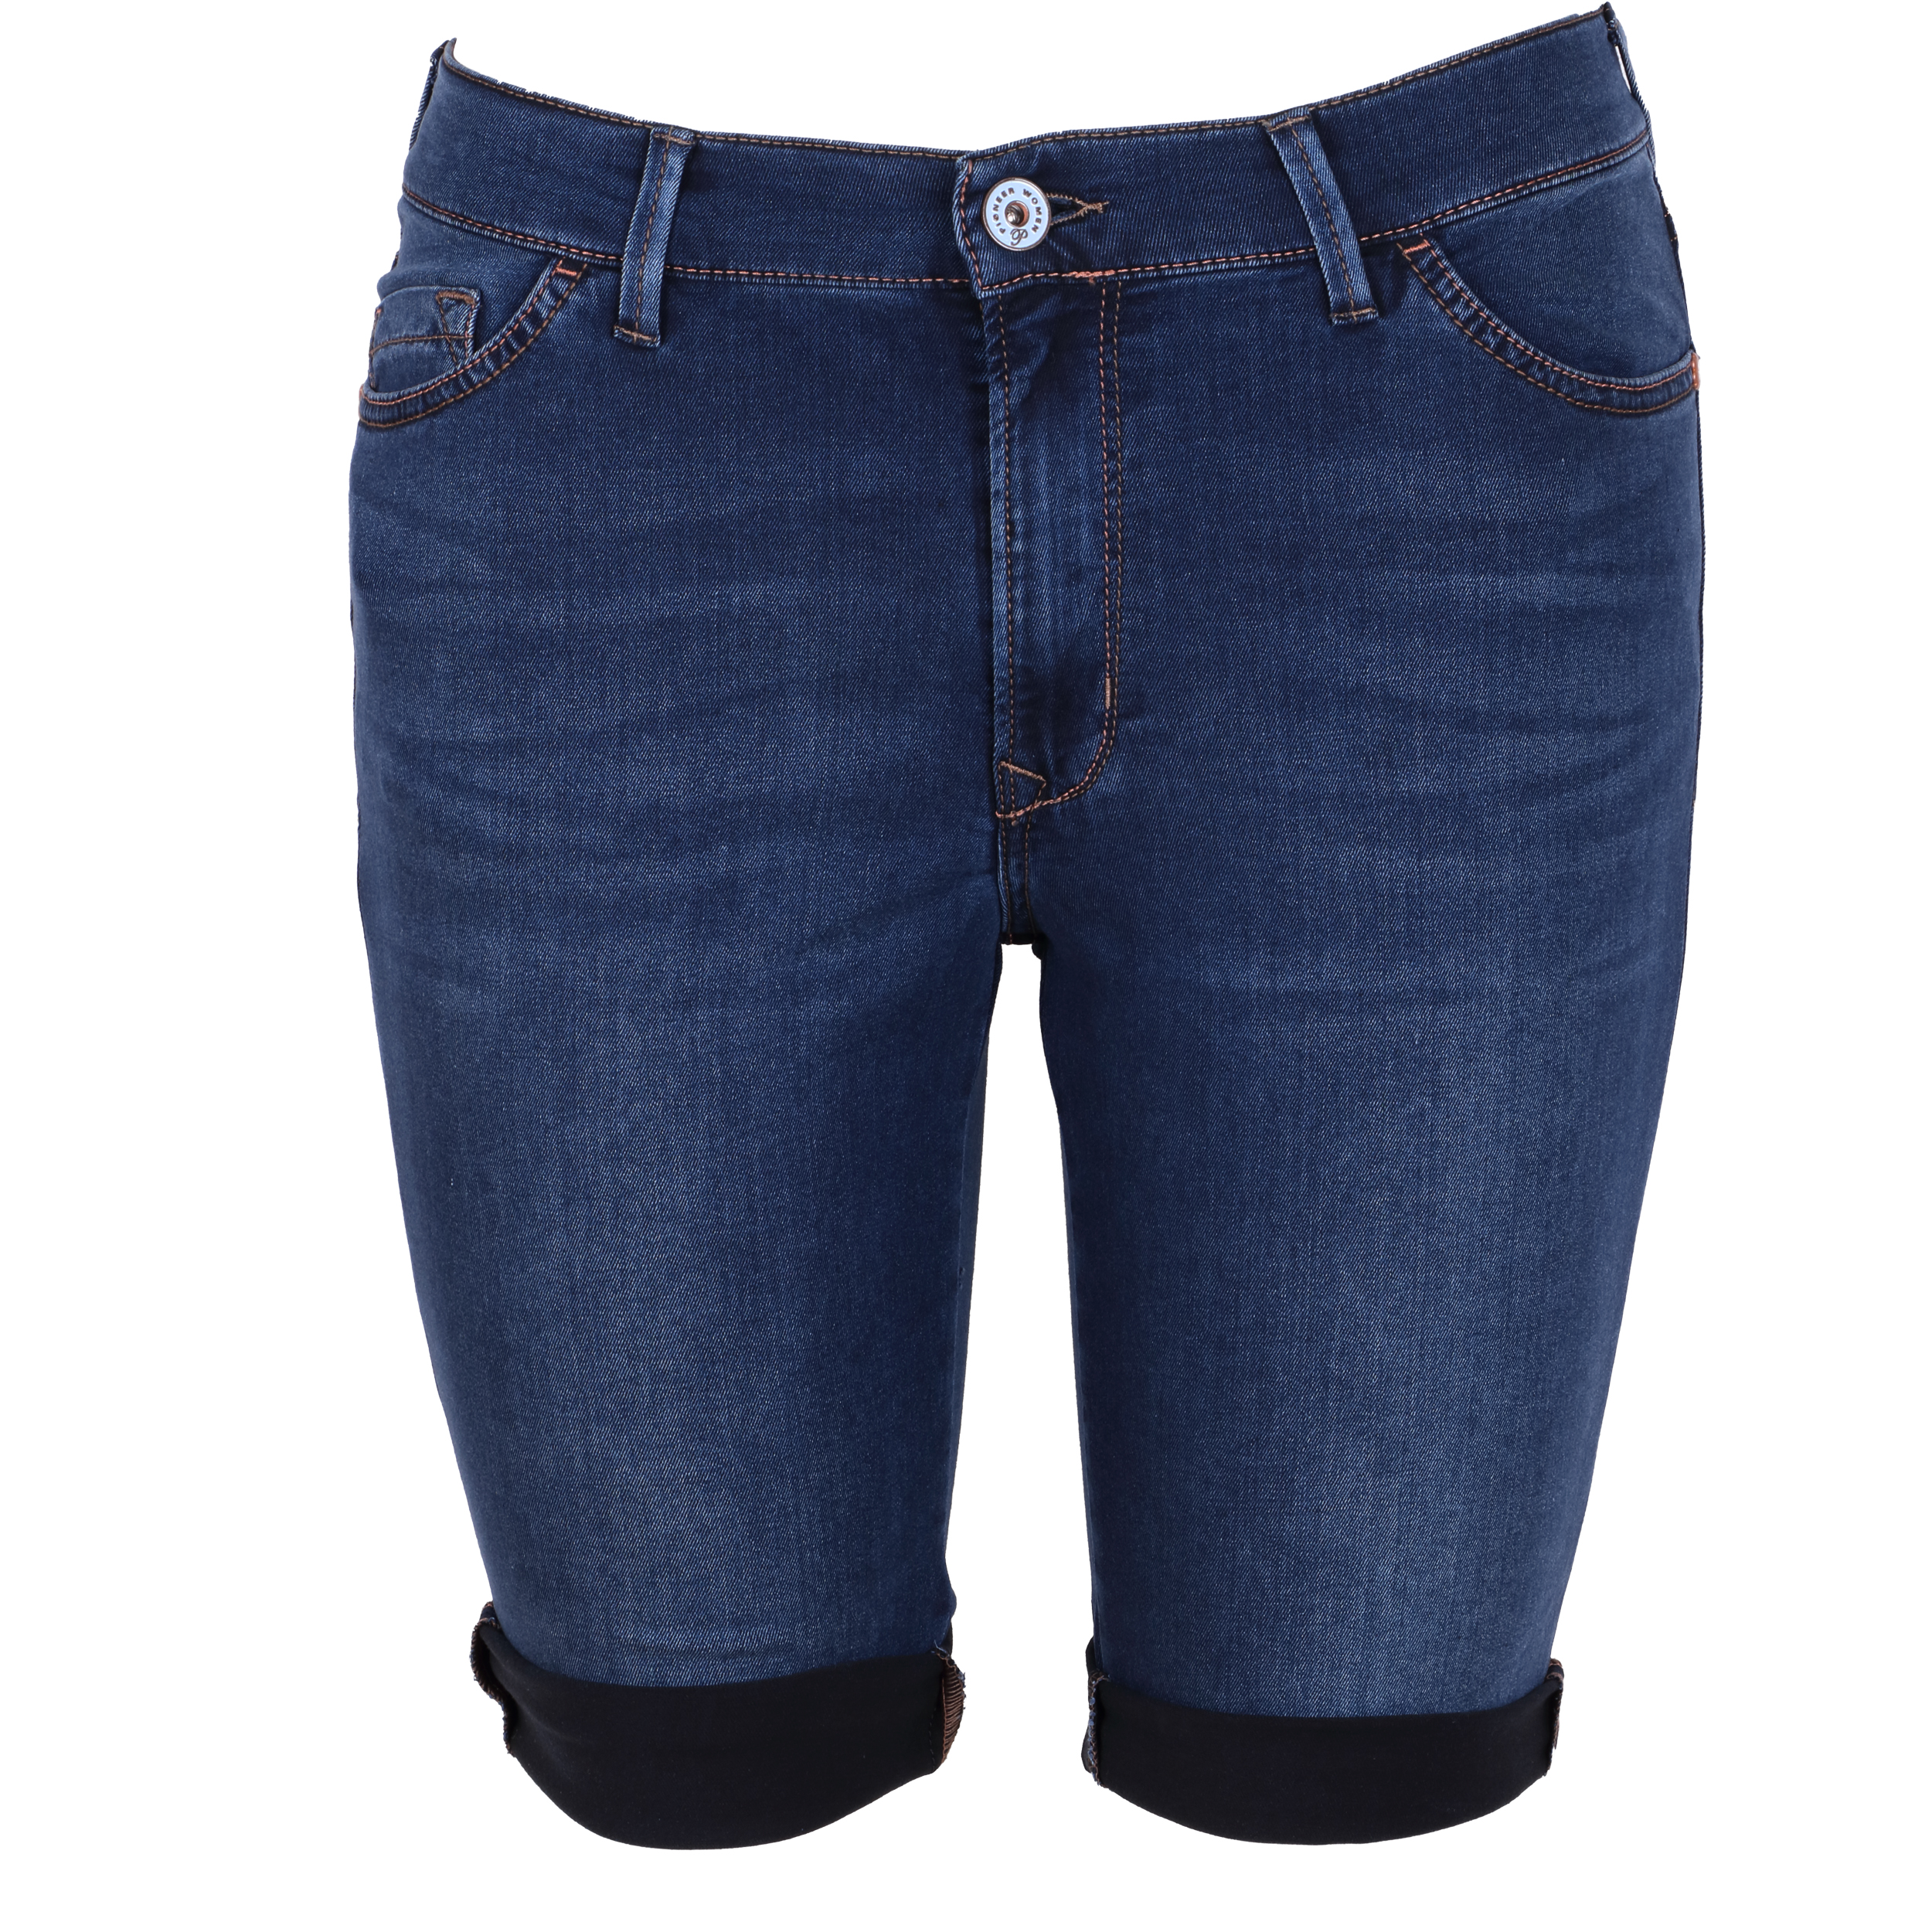 Pioneer Damen Jeans-Shorts 40 blau